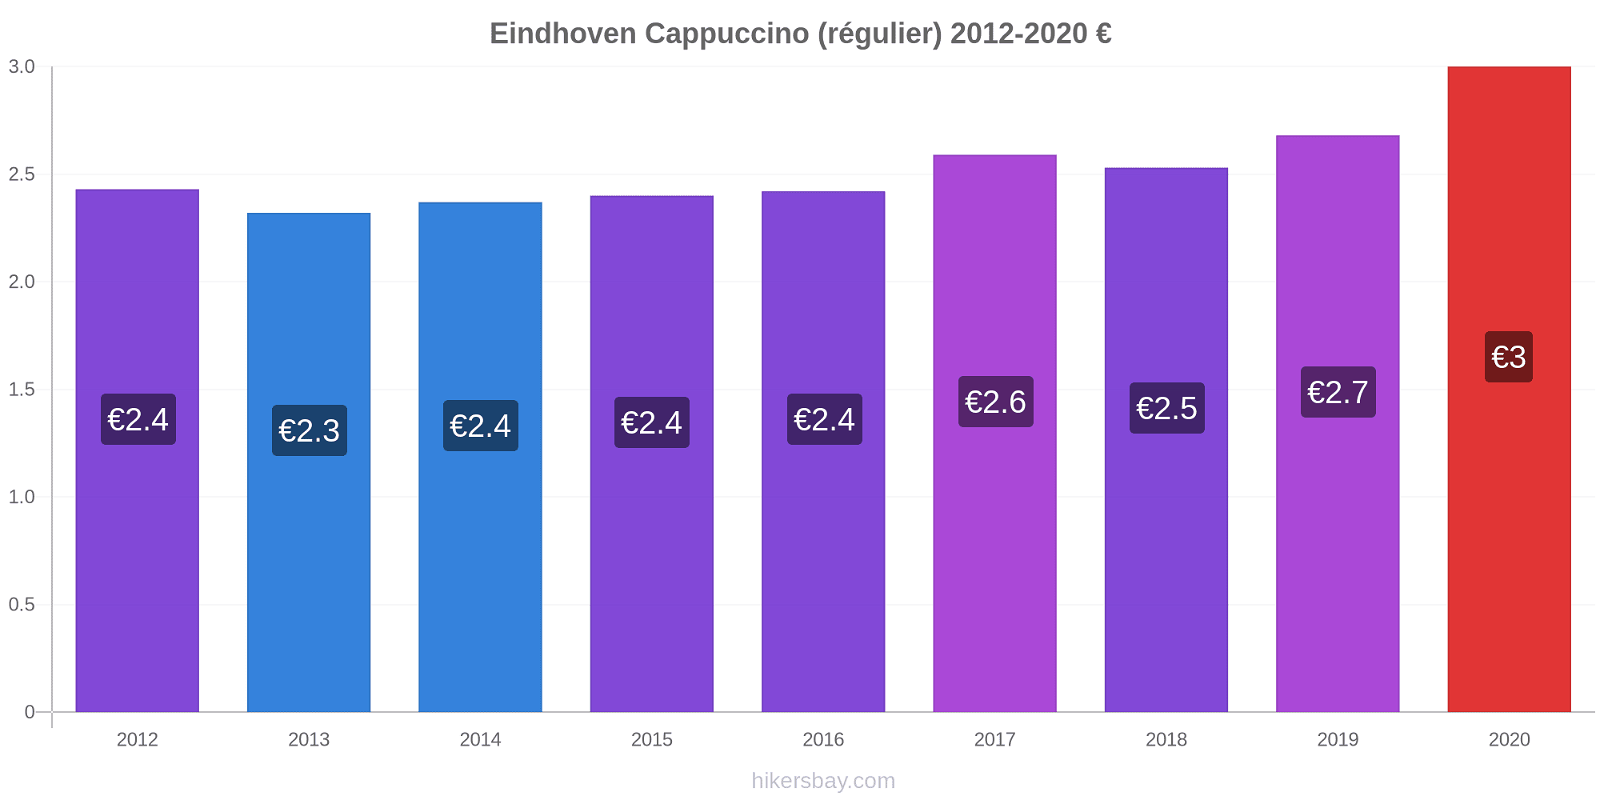 Eindhoven changements de prix Cappuccino (régulier) hikersbay.com